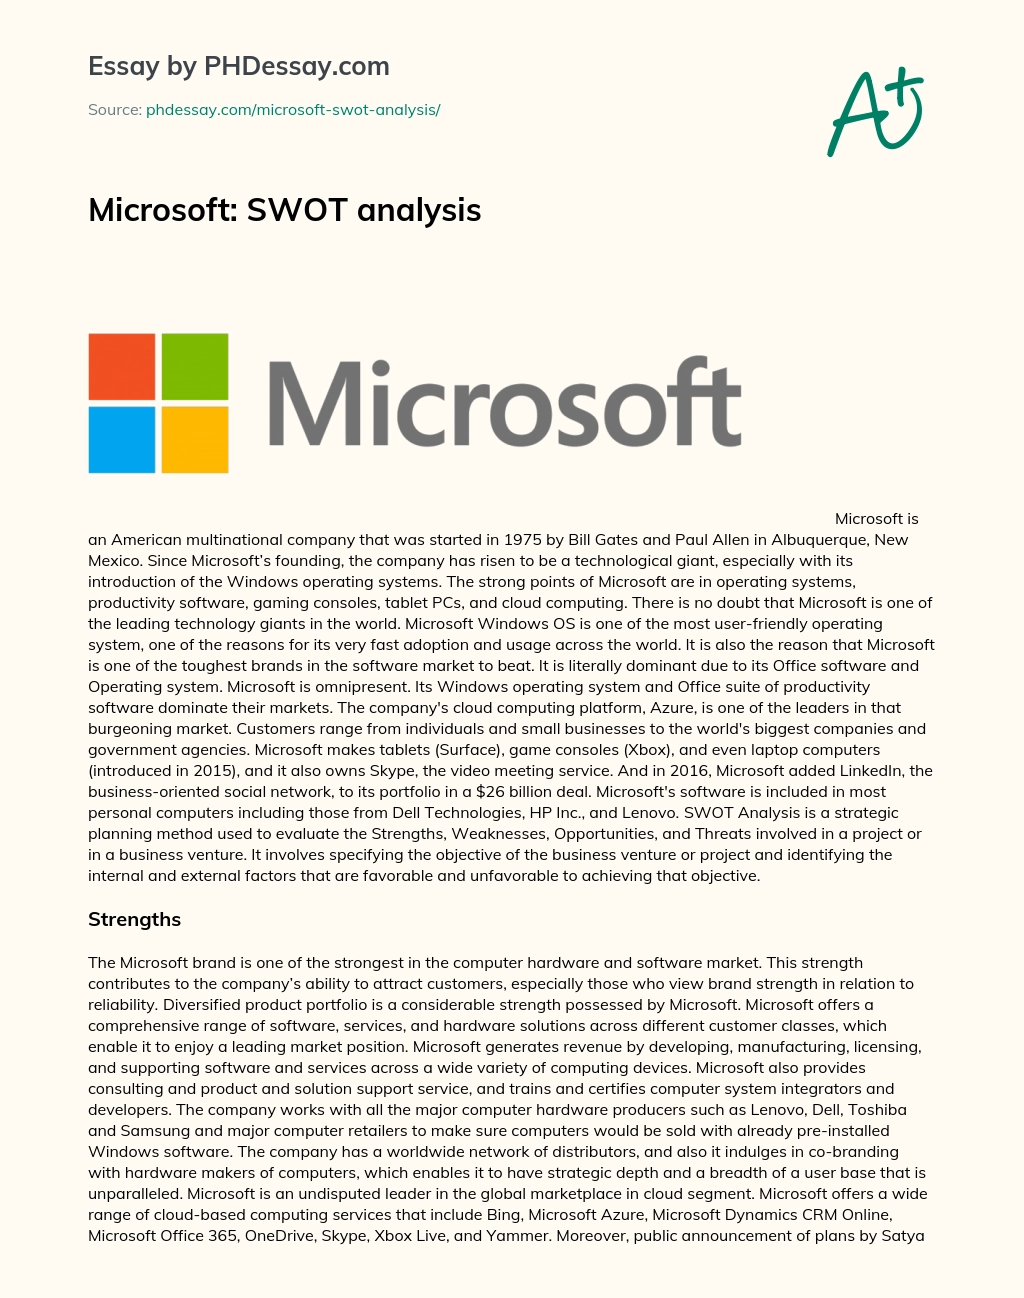 Microsoft: SWOT analysis essay